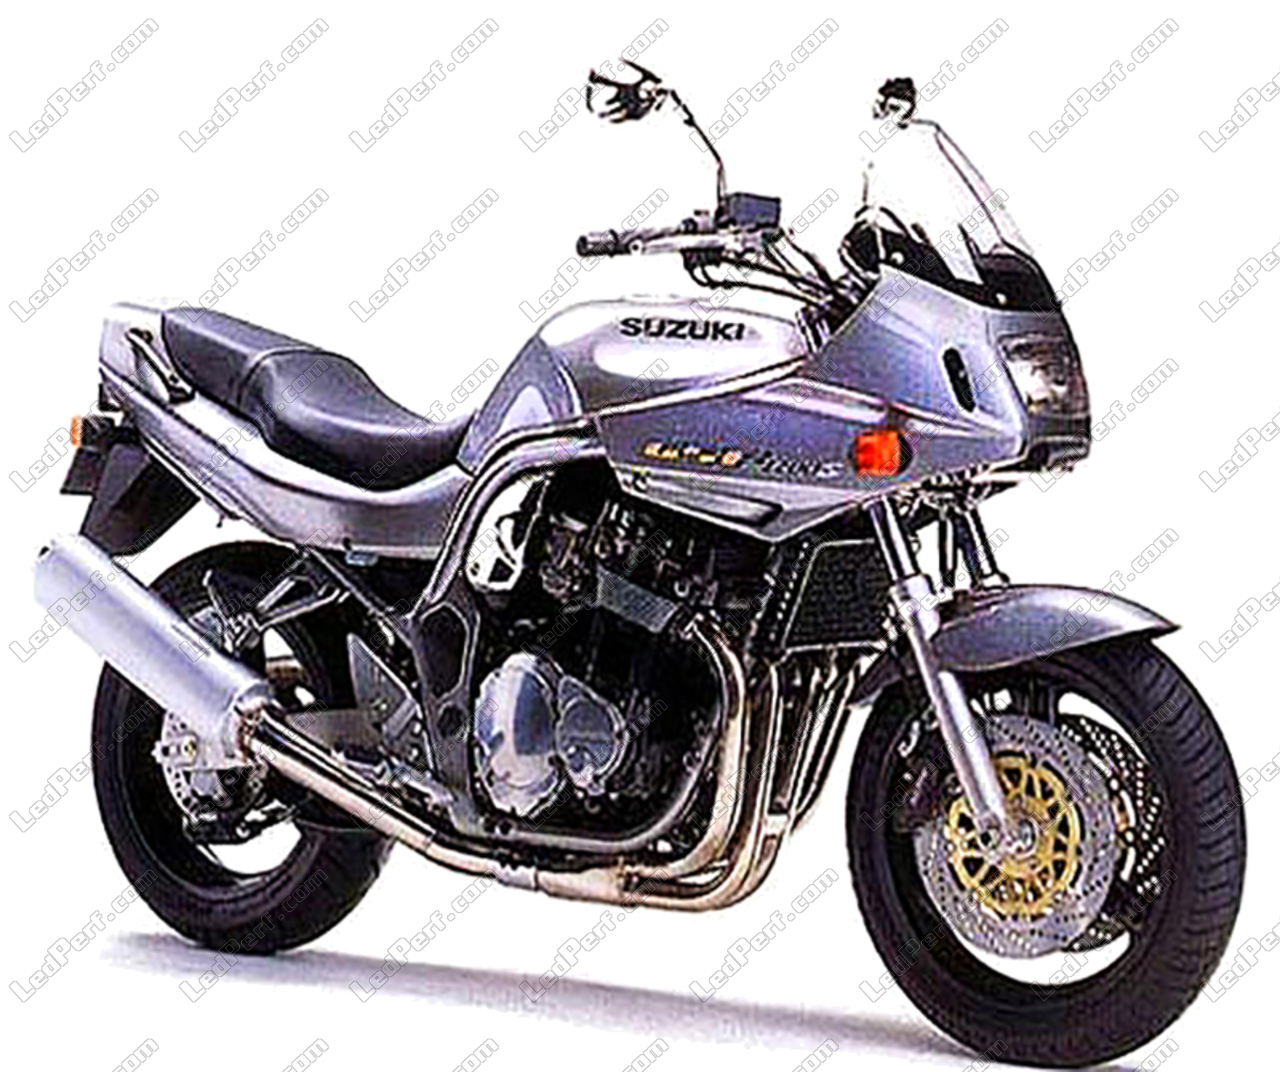 LED bulb for Suzuki Bandit 600 S (1995 - 1999)